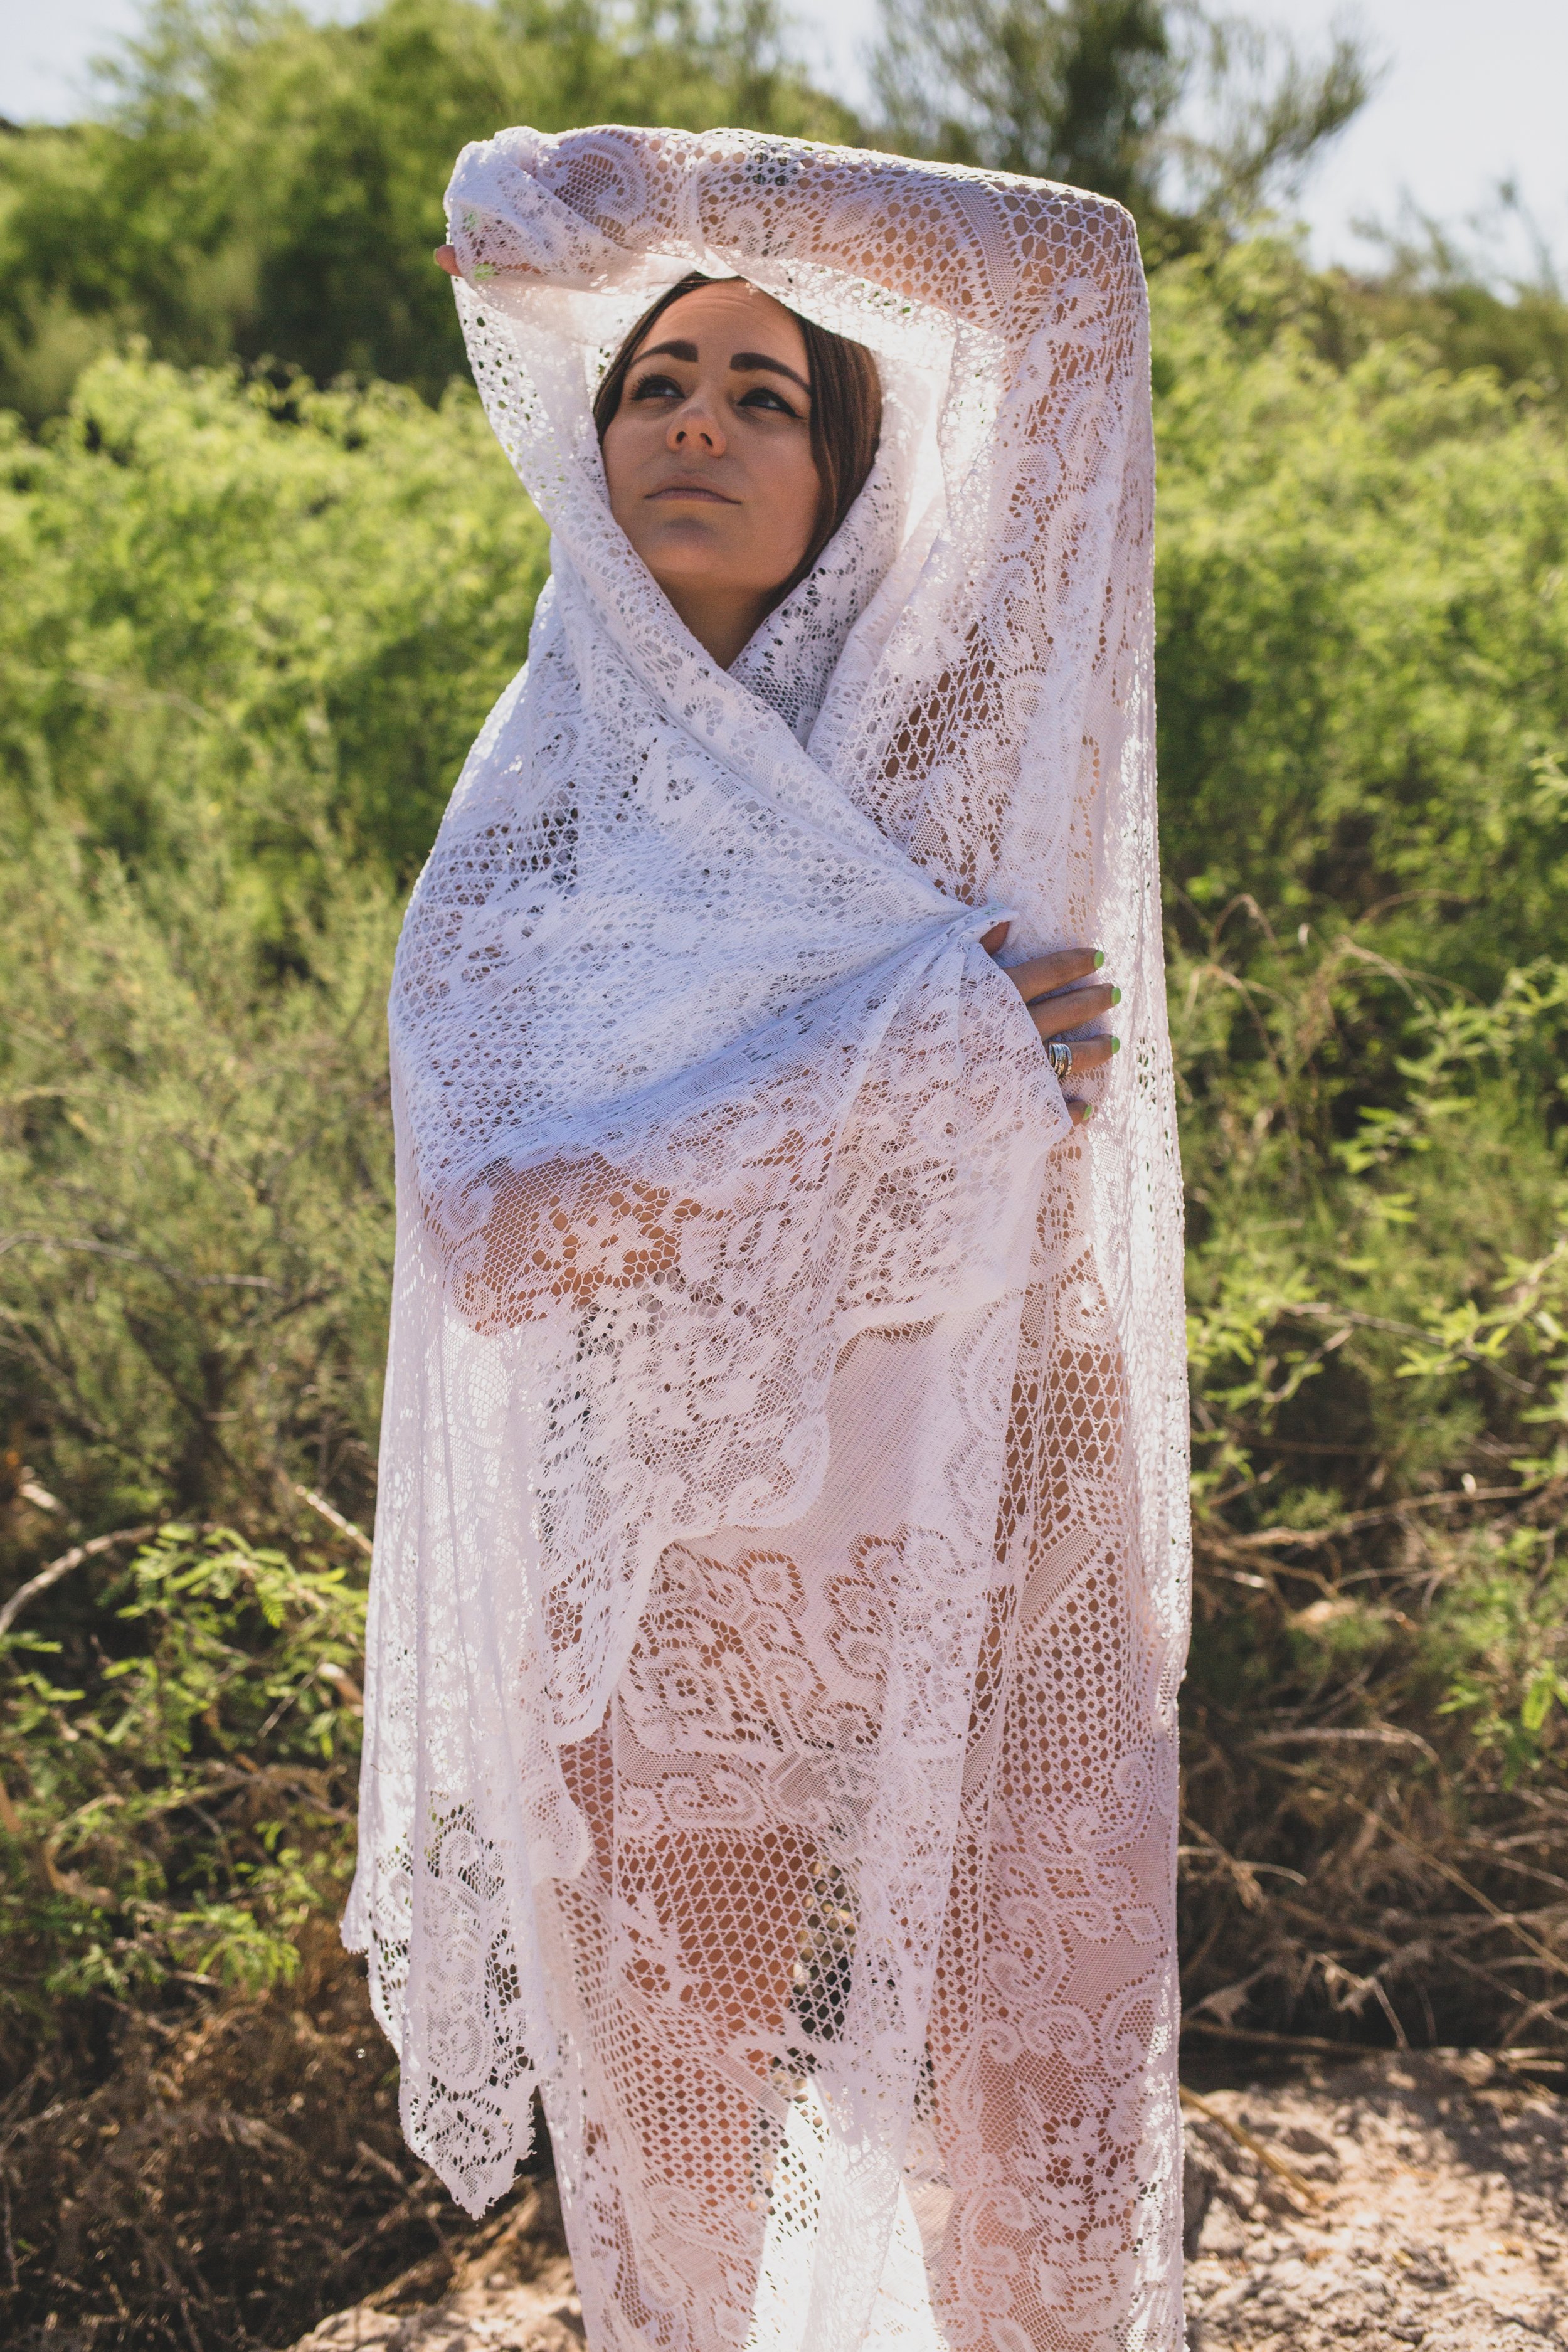 Woman poses for non-traditional boudoir photography at the Salt River, Arizona, by Phoenix Boudoir Photographer Jennifer Lind Schutsky.